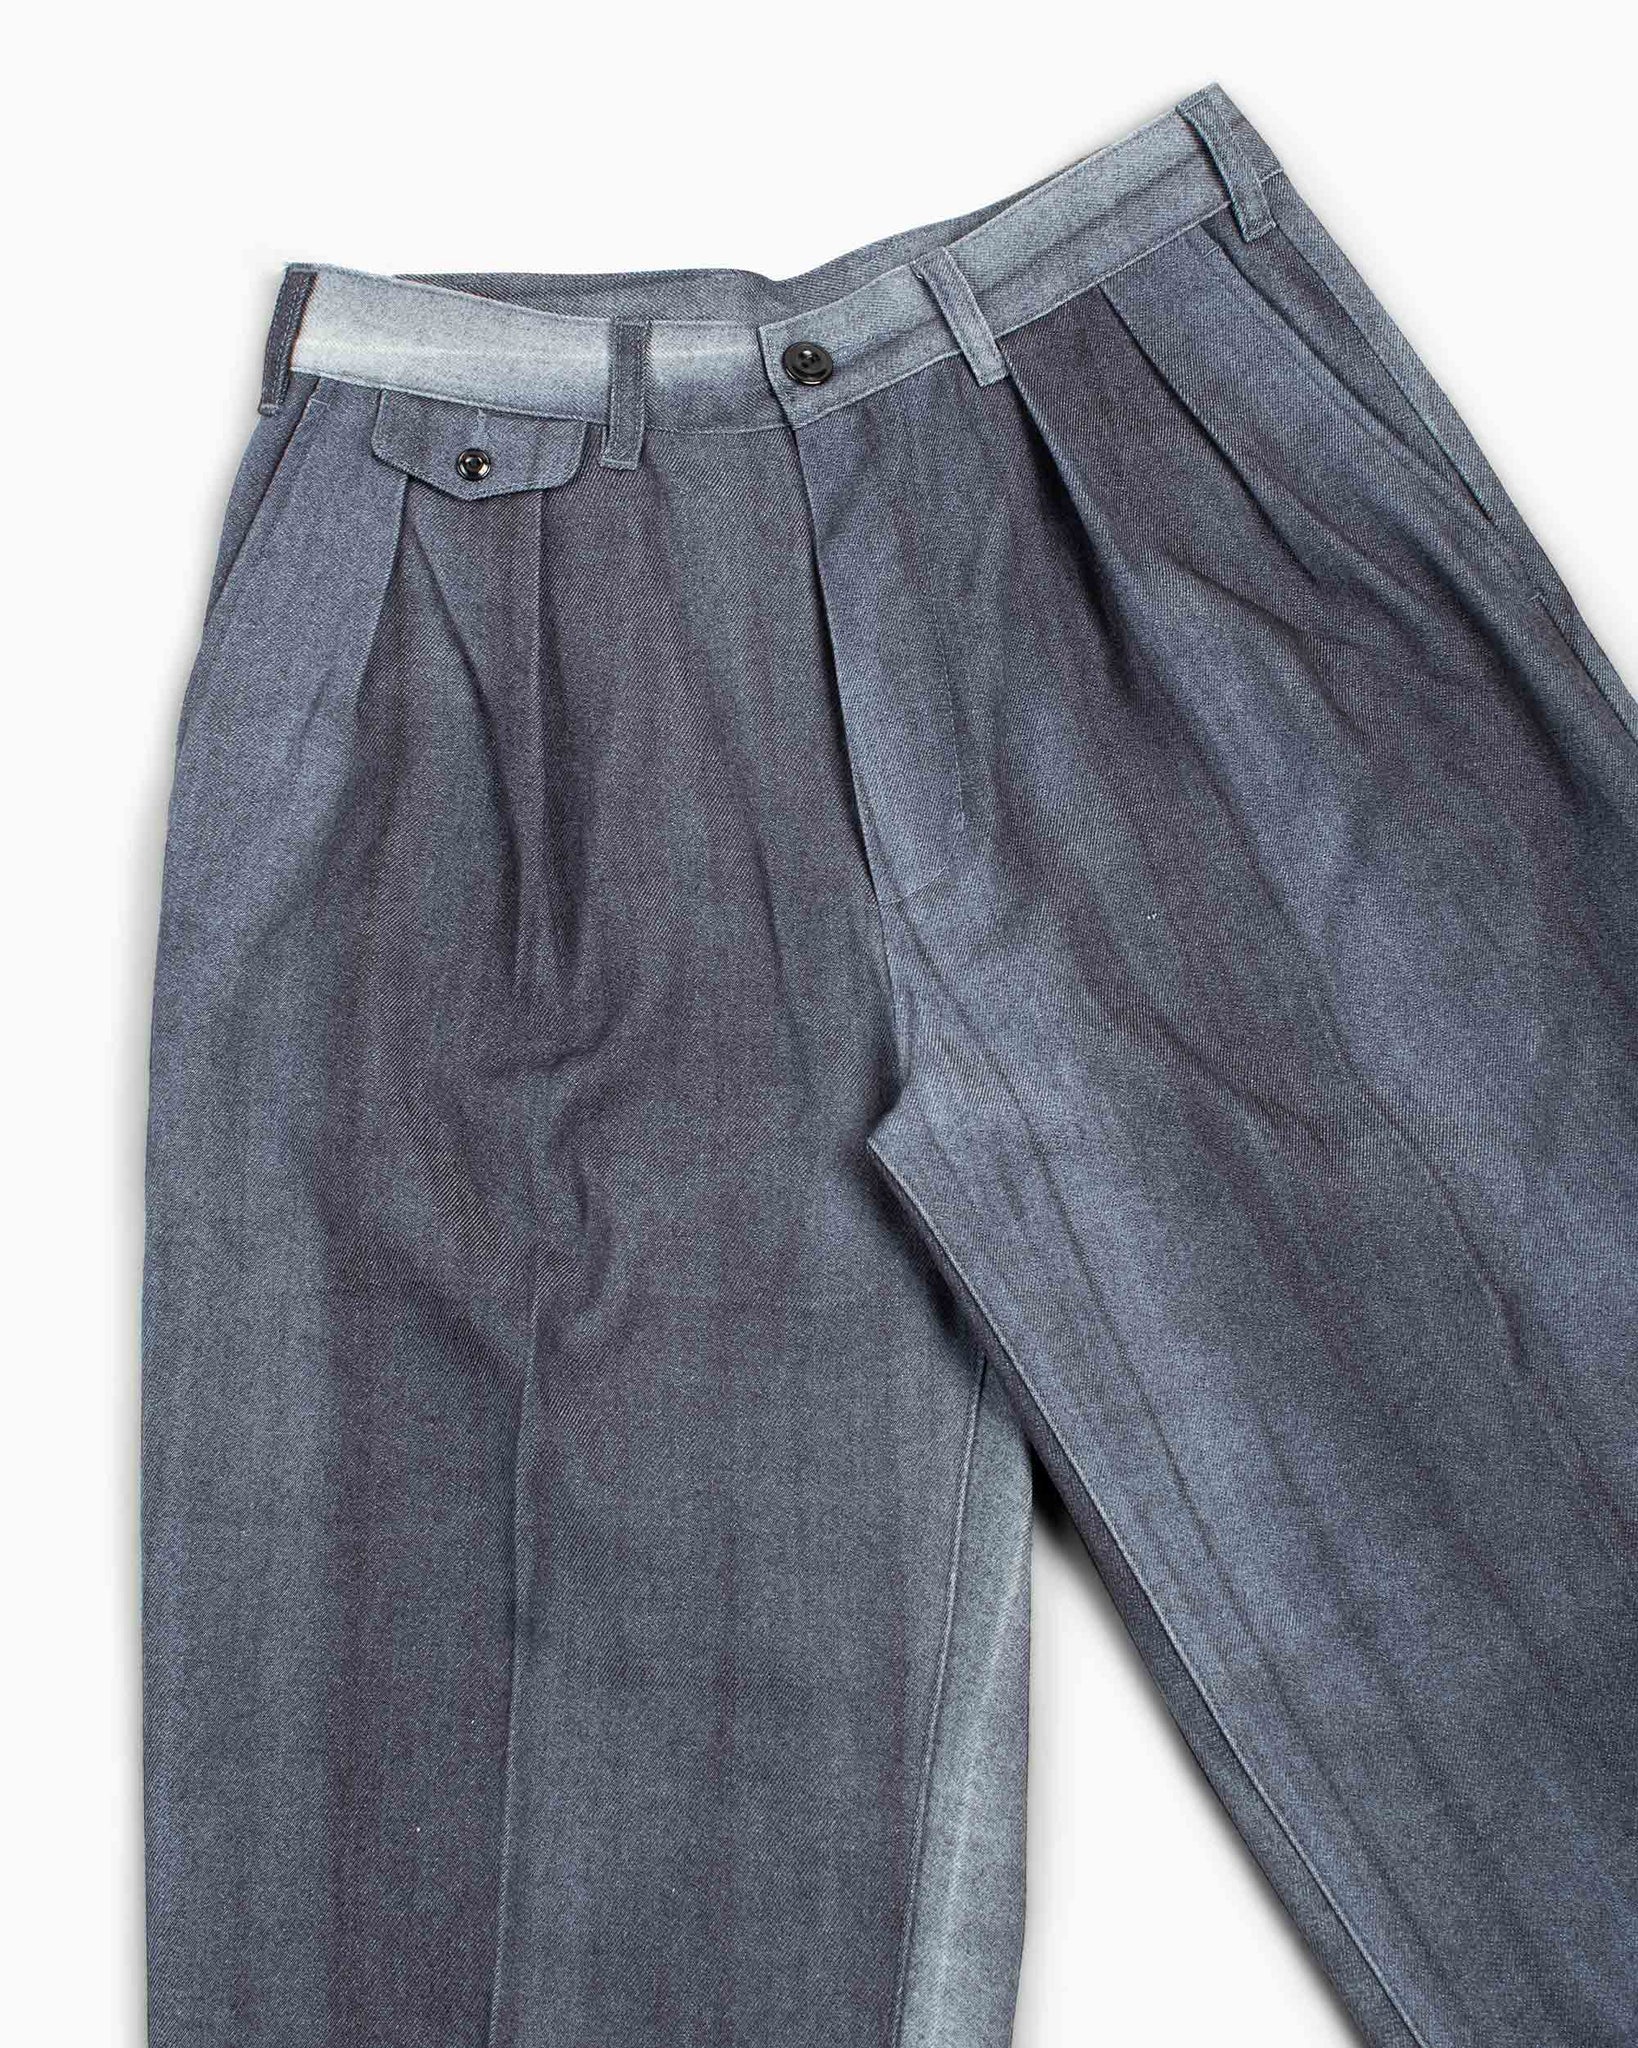 Beams Plus 2Pleats Trousers 'MADARA' Dye Navy Details